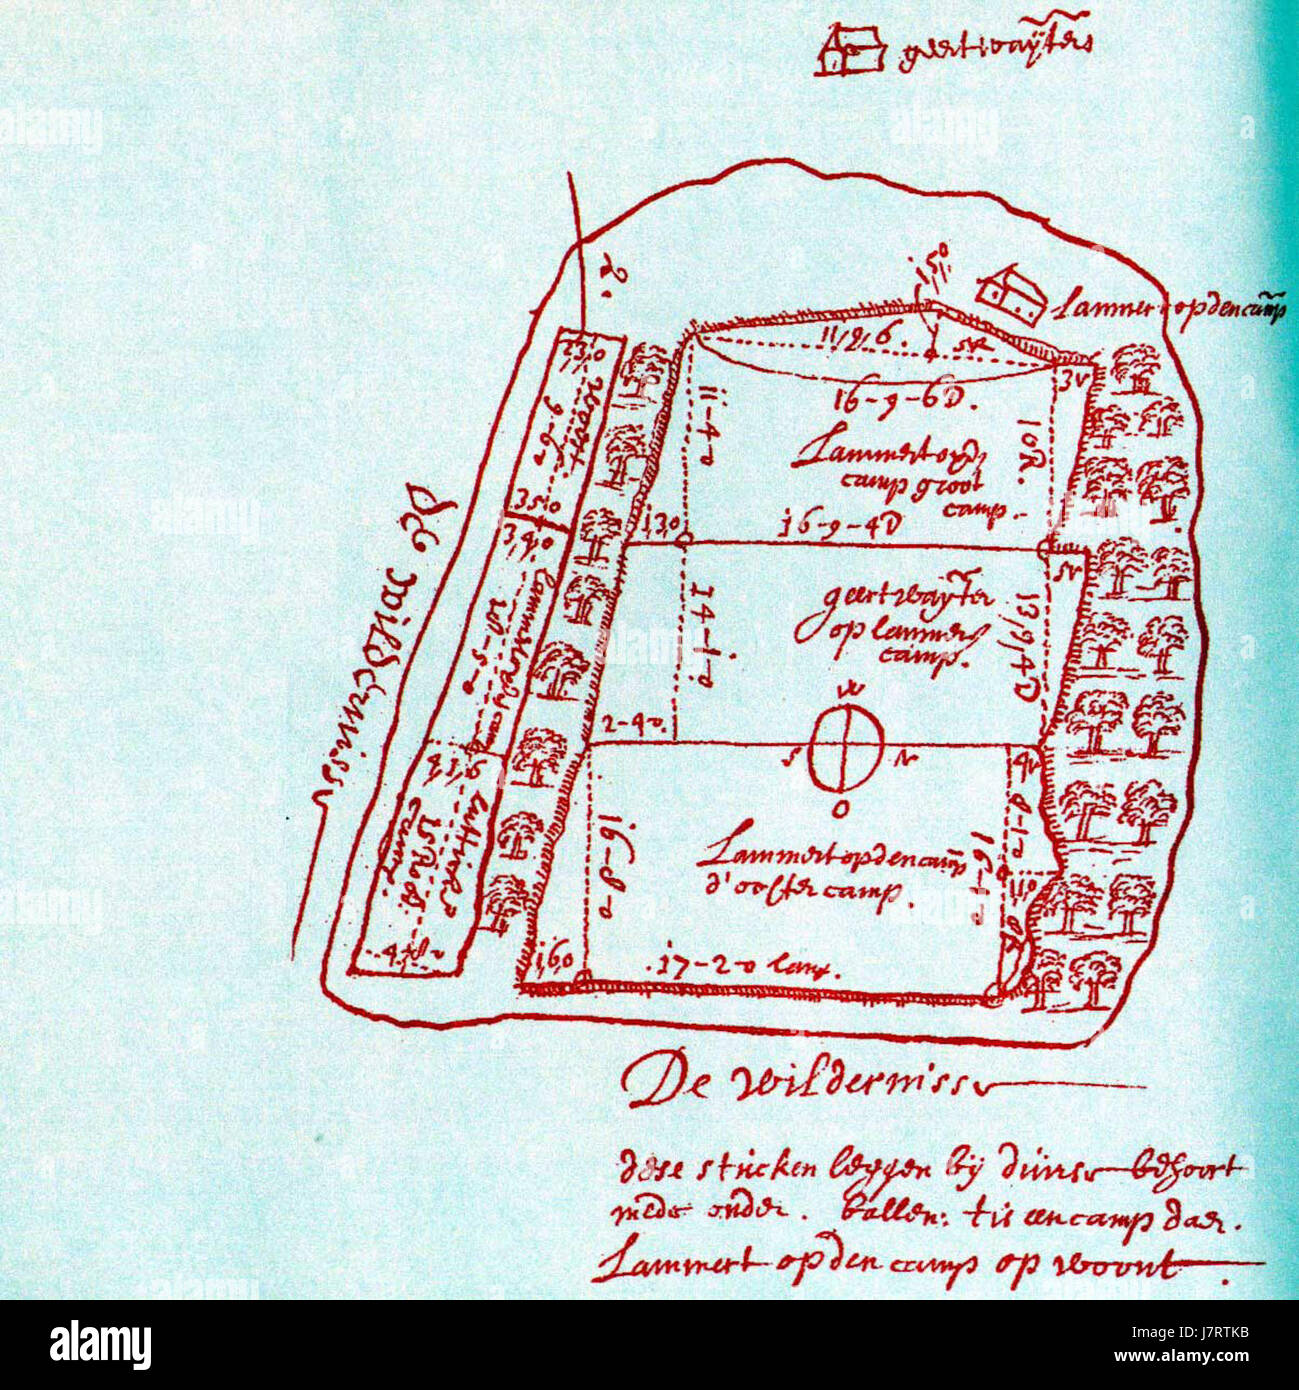 Boerderij Kamps grondschattingsregister 1642 1654 Stock Photo